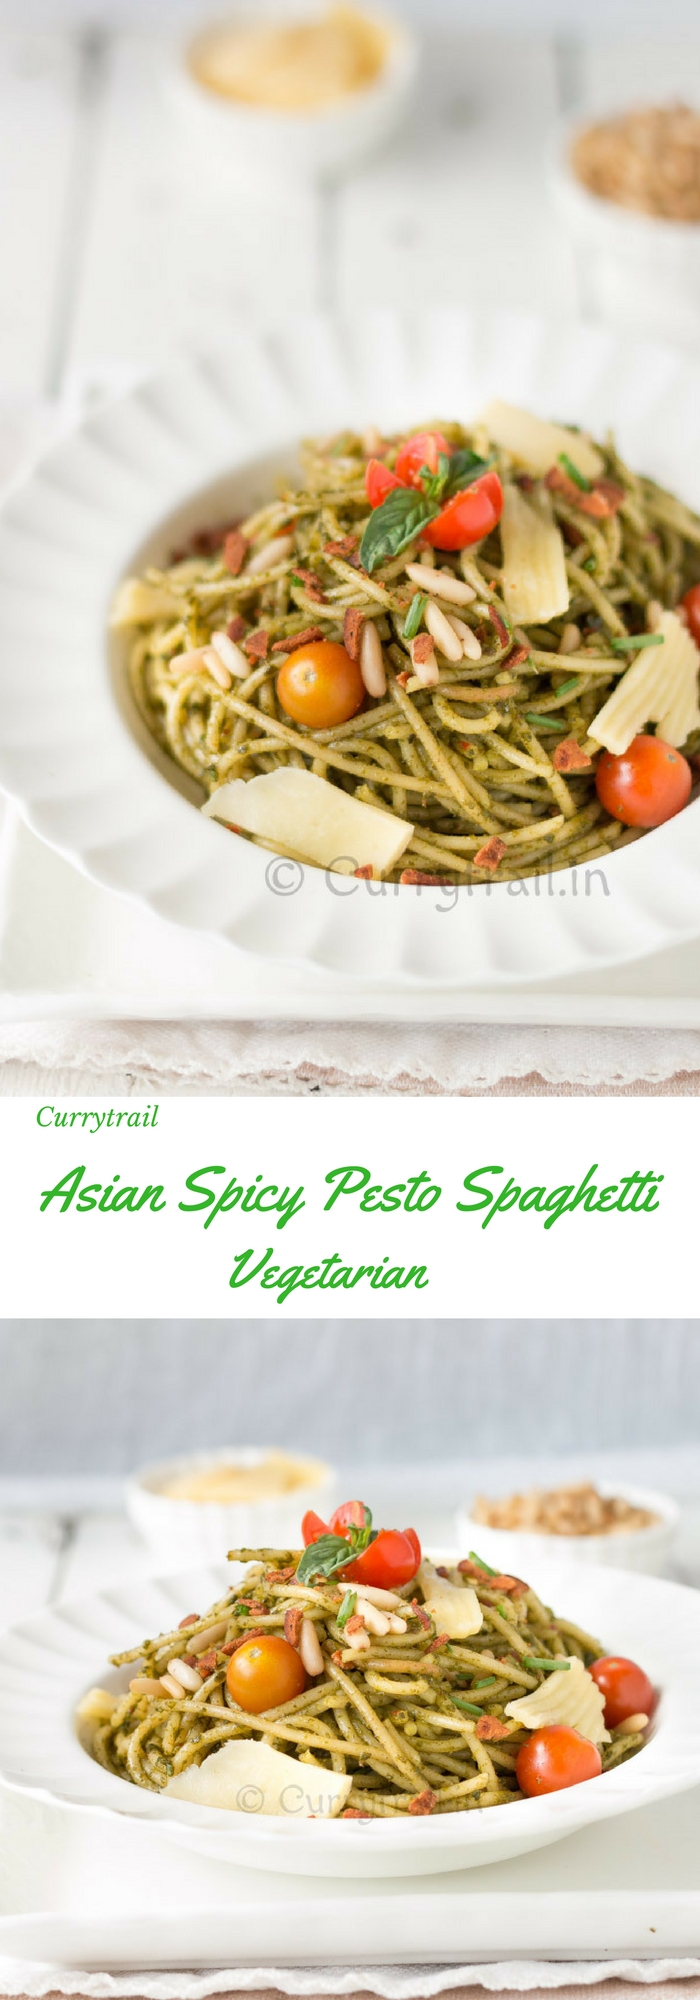 Asian Spicy Pesto Spaghetti